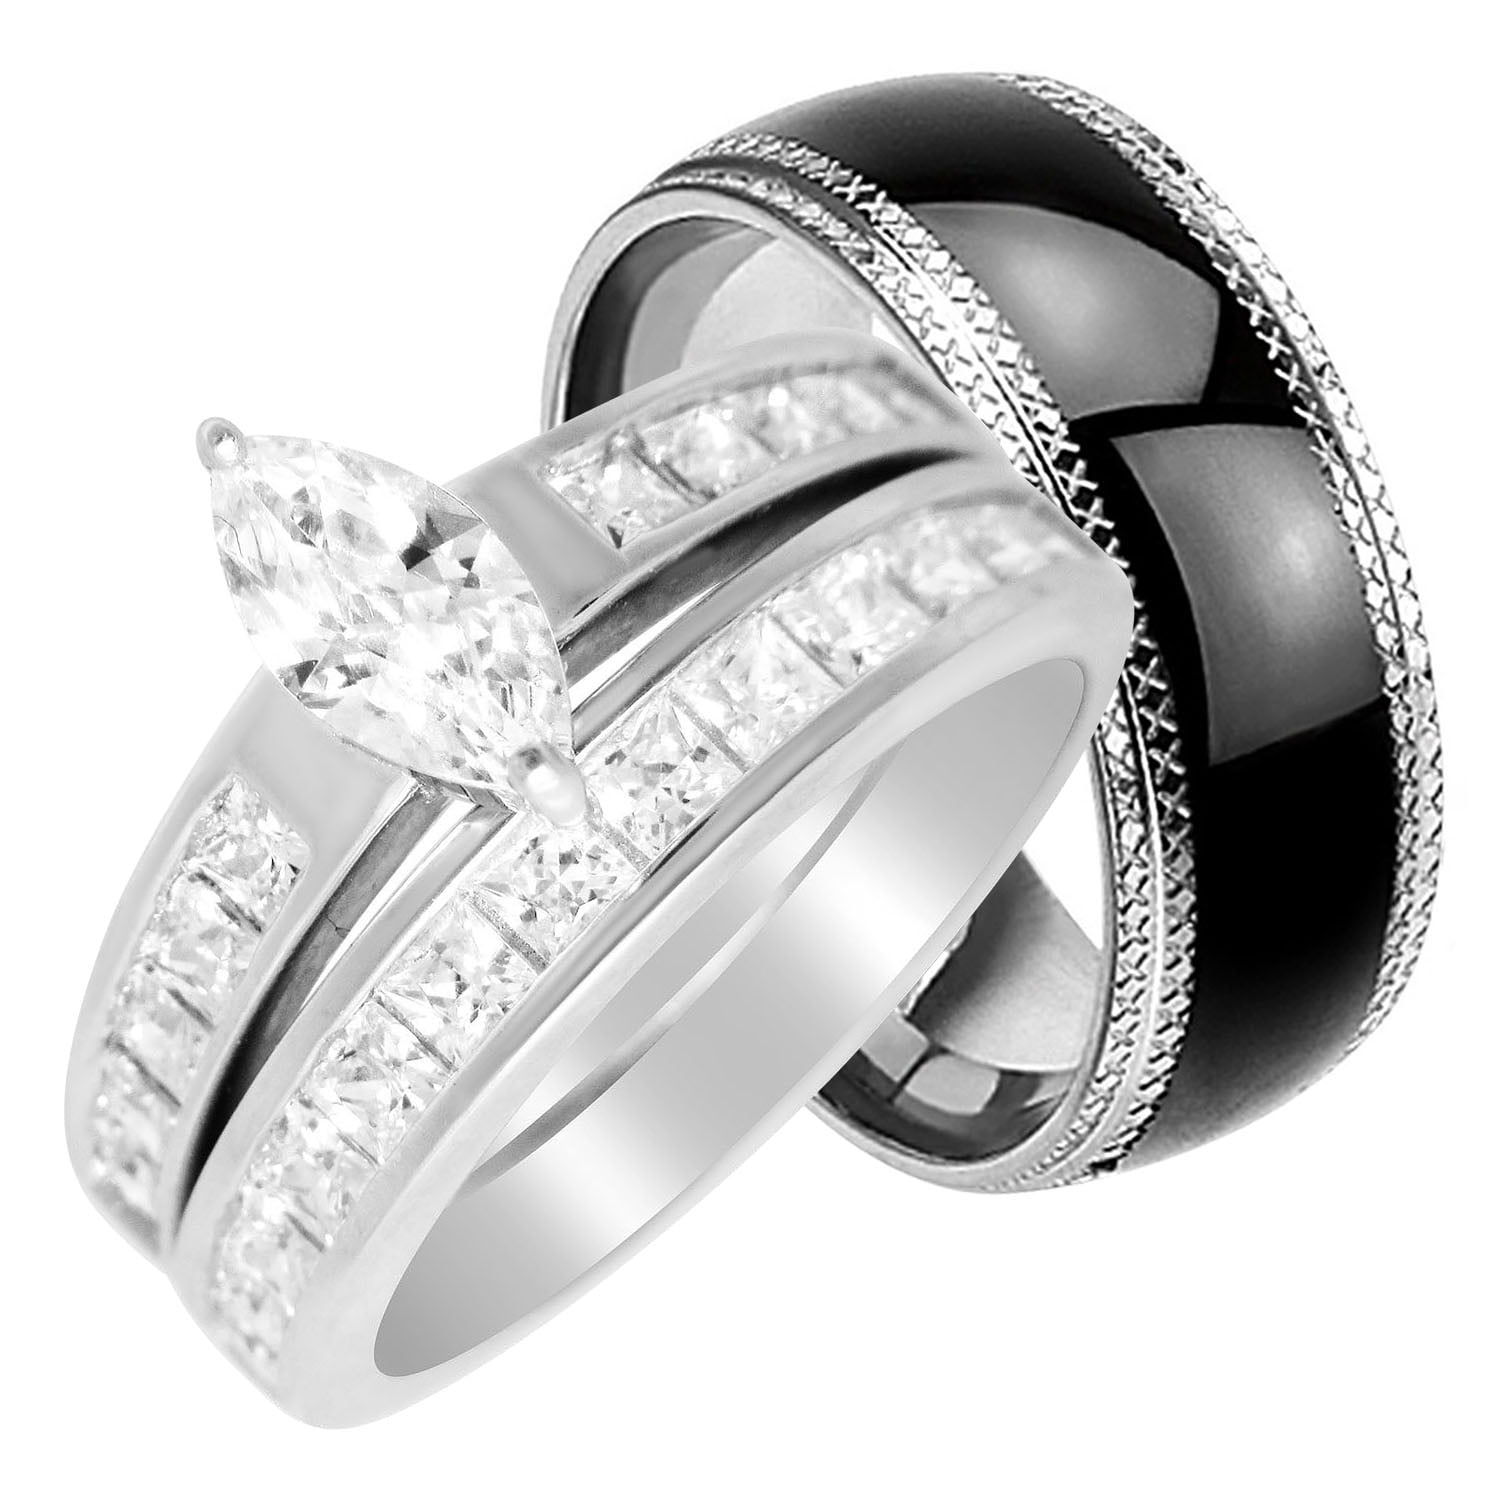 LaRaso & Co His Hers Wedding Rings Set Cheap Matching Wedding Bands